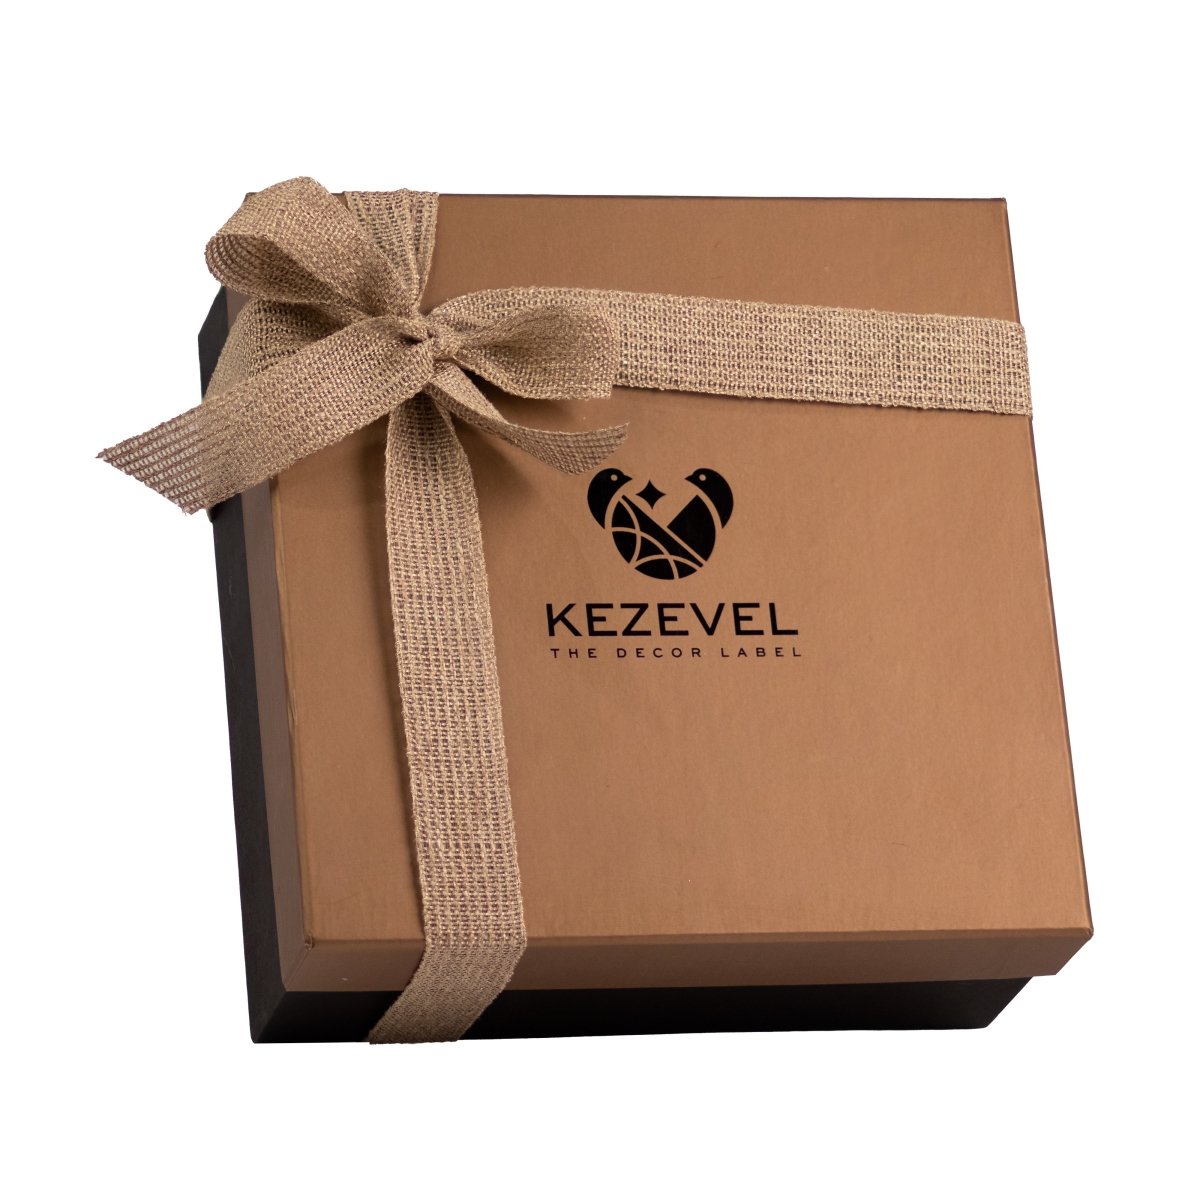 Kezevel Aromatic hamper of Lavender and Lemongrass Fragrances with Potpourri, Oils and Tea Light Candle- Pack of 1 - Kezevel